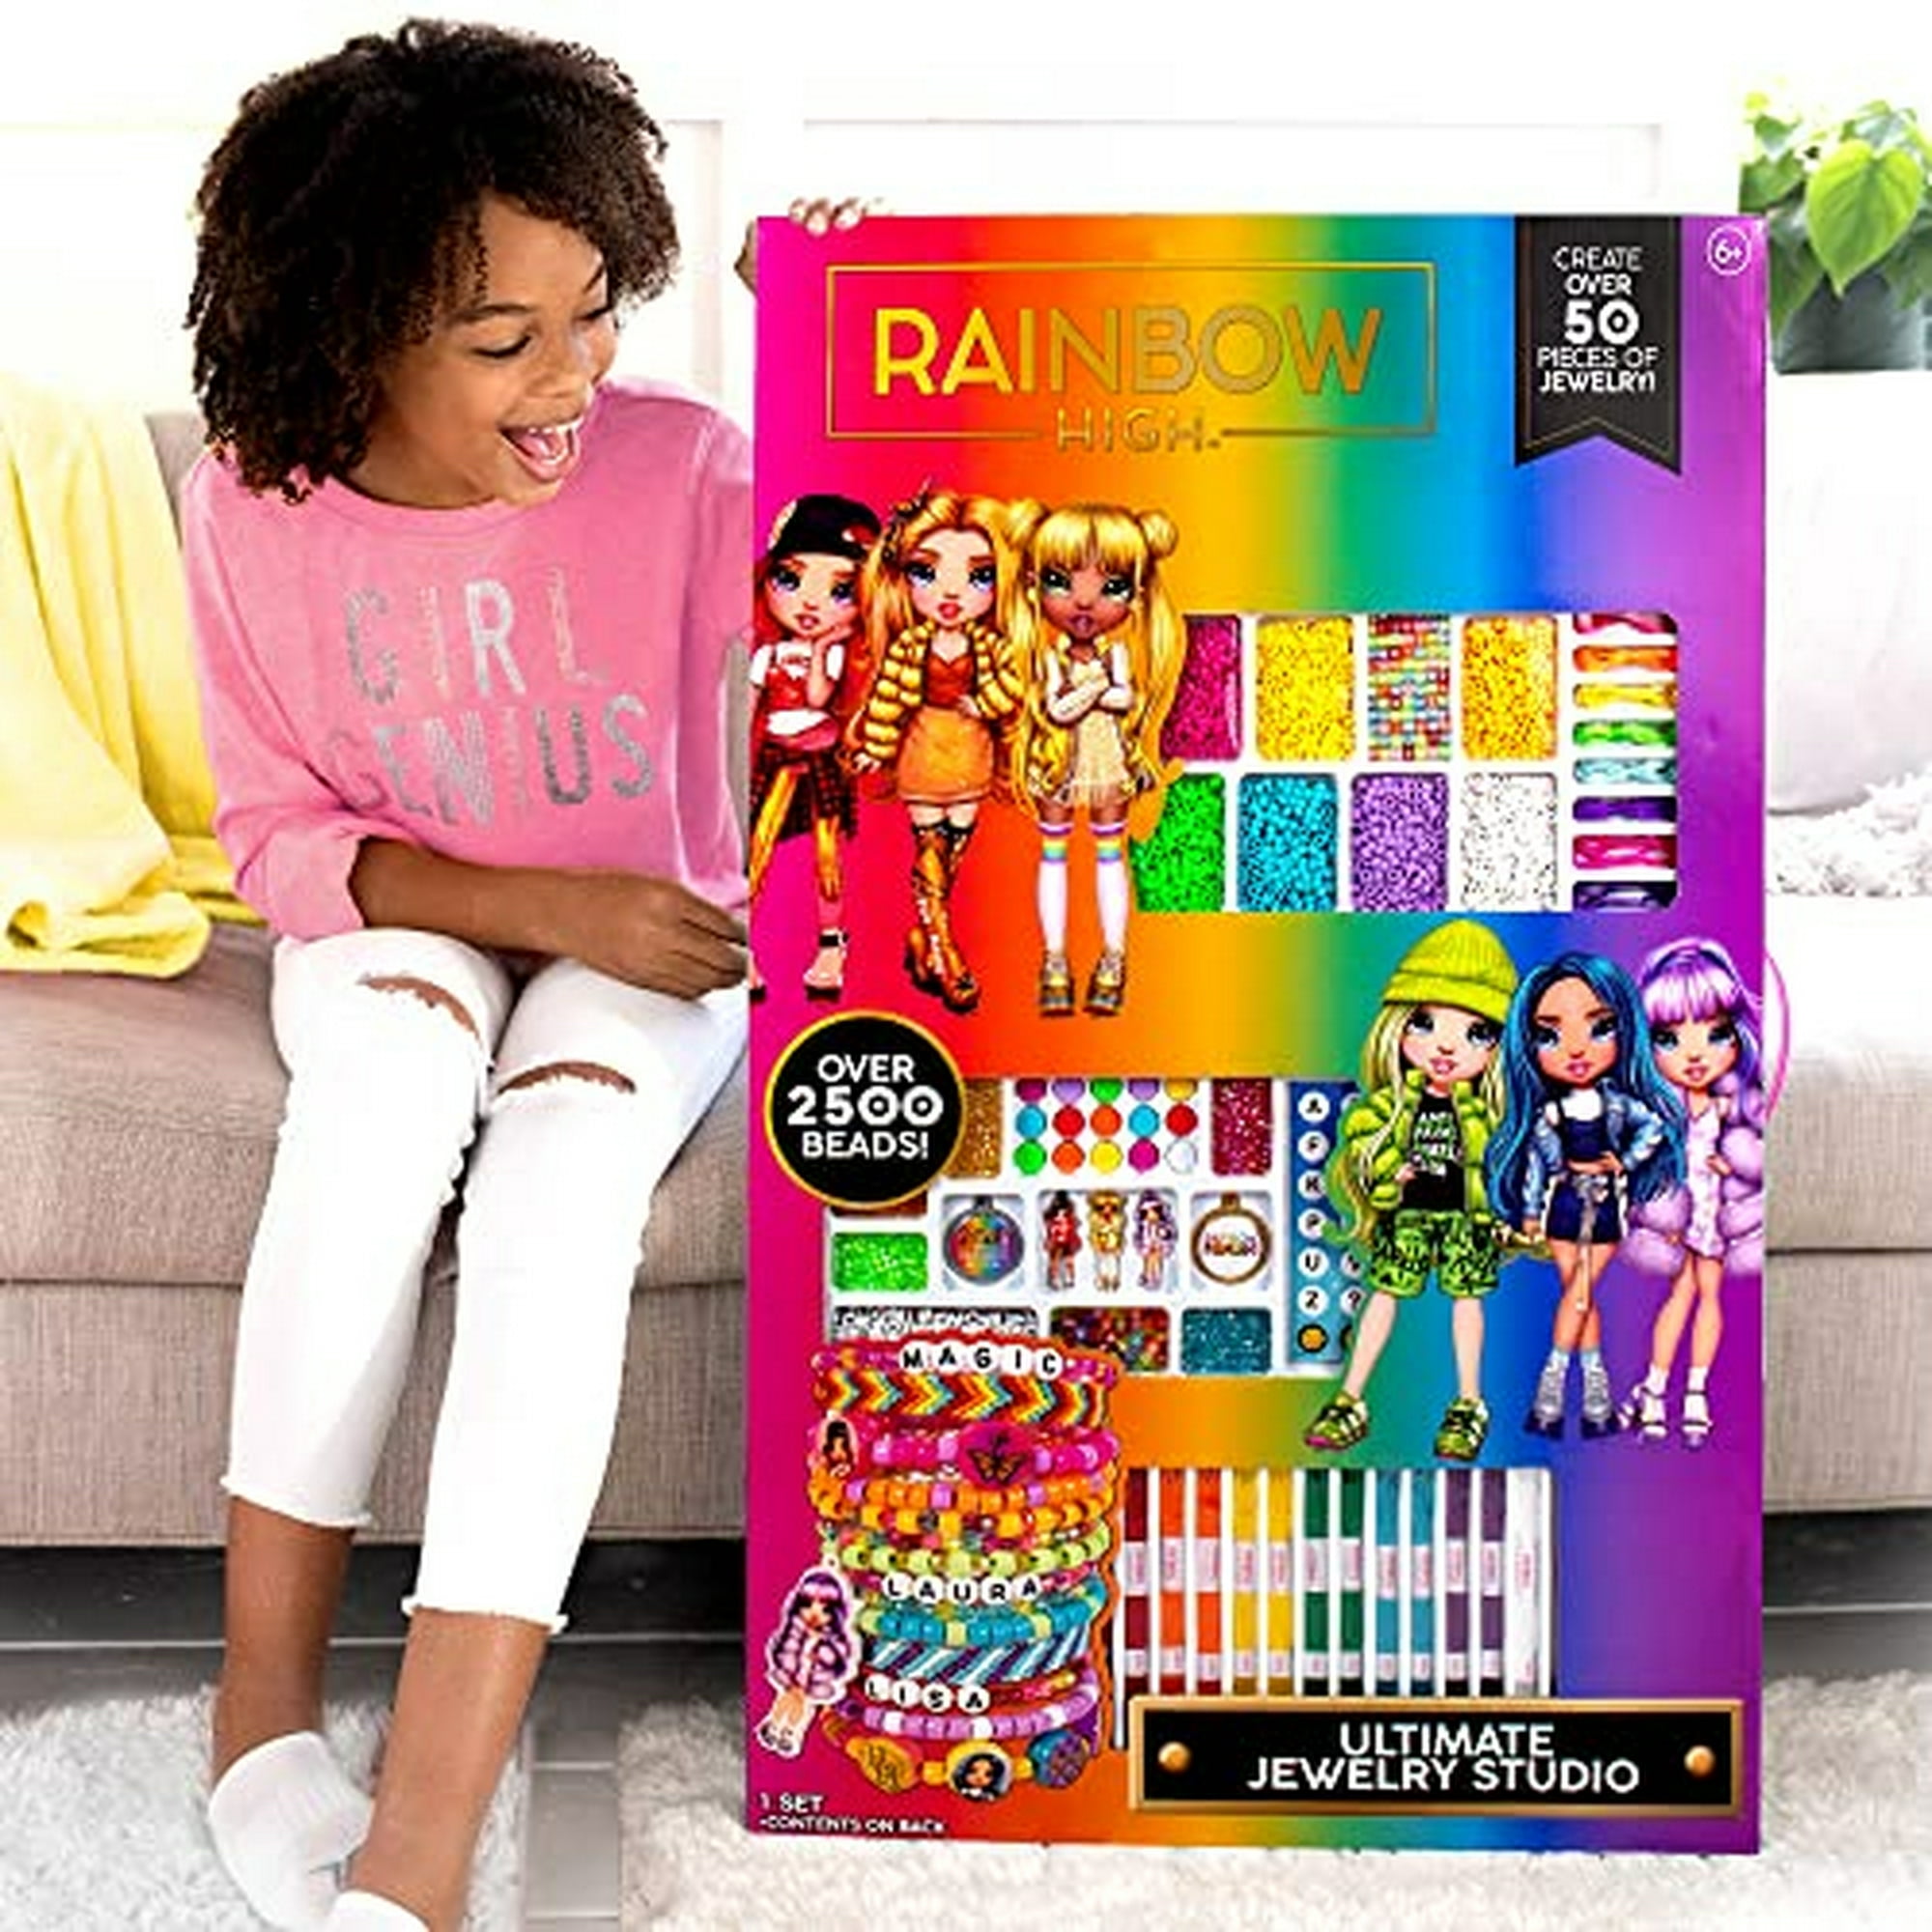 Diseña La Moda Niña: Libro De Colorear Para Niñas De 8 a 12 Años |  Diferentes Diseños de moda - Coloración De Fashion | Cuaderno Creativo Para  Chicas